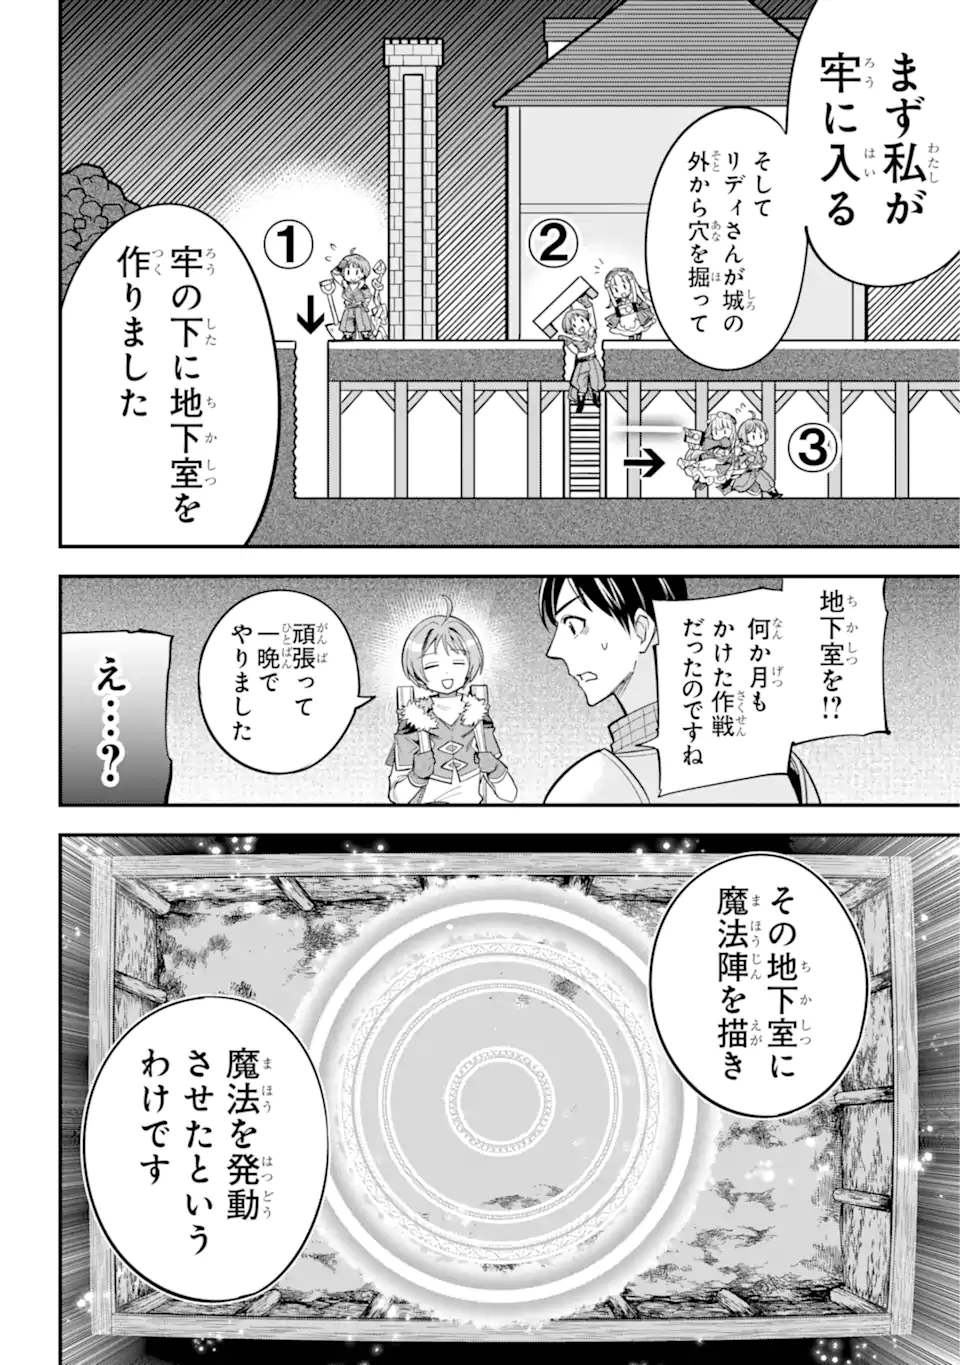 Yuusha Party no Nimotsu Mochi - Chapter 17.1 - Page 6